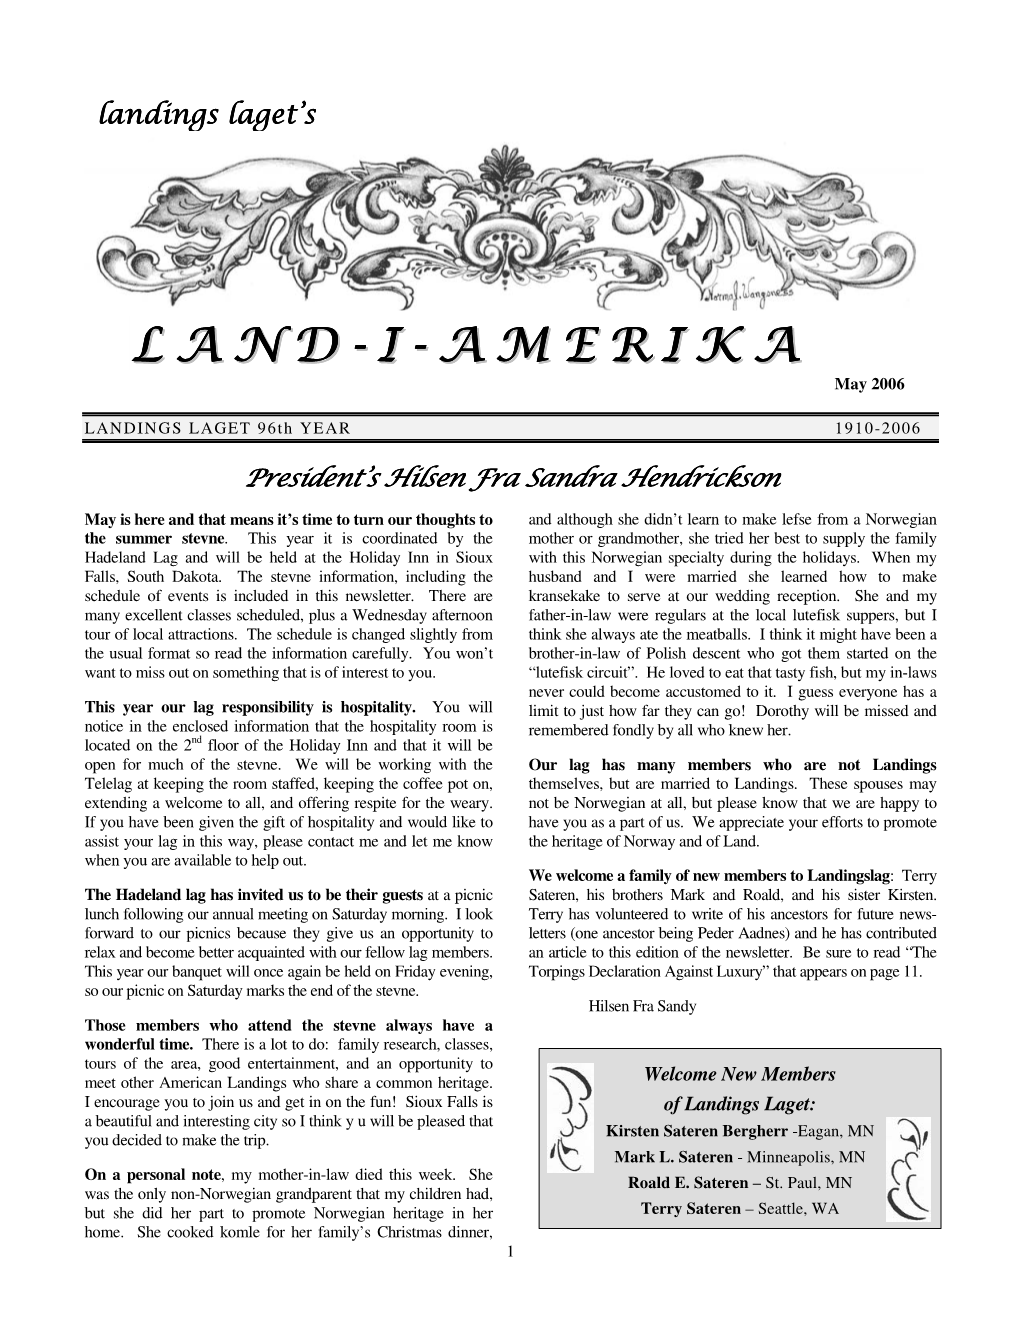 May 2006 Issue of Land I Amerika